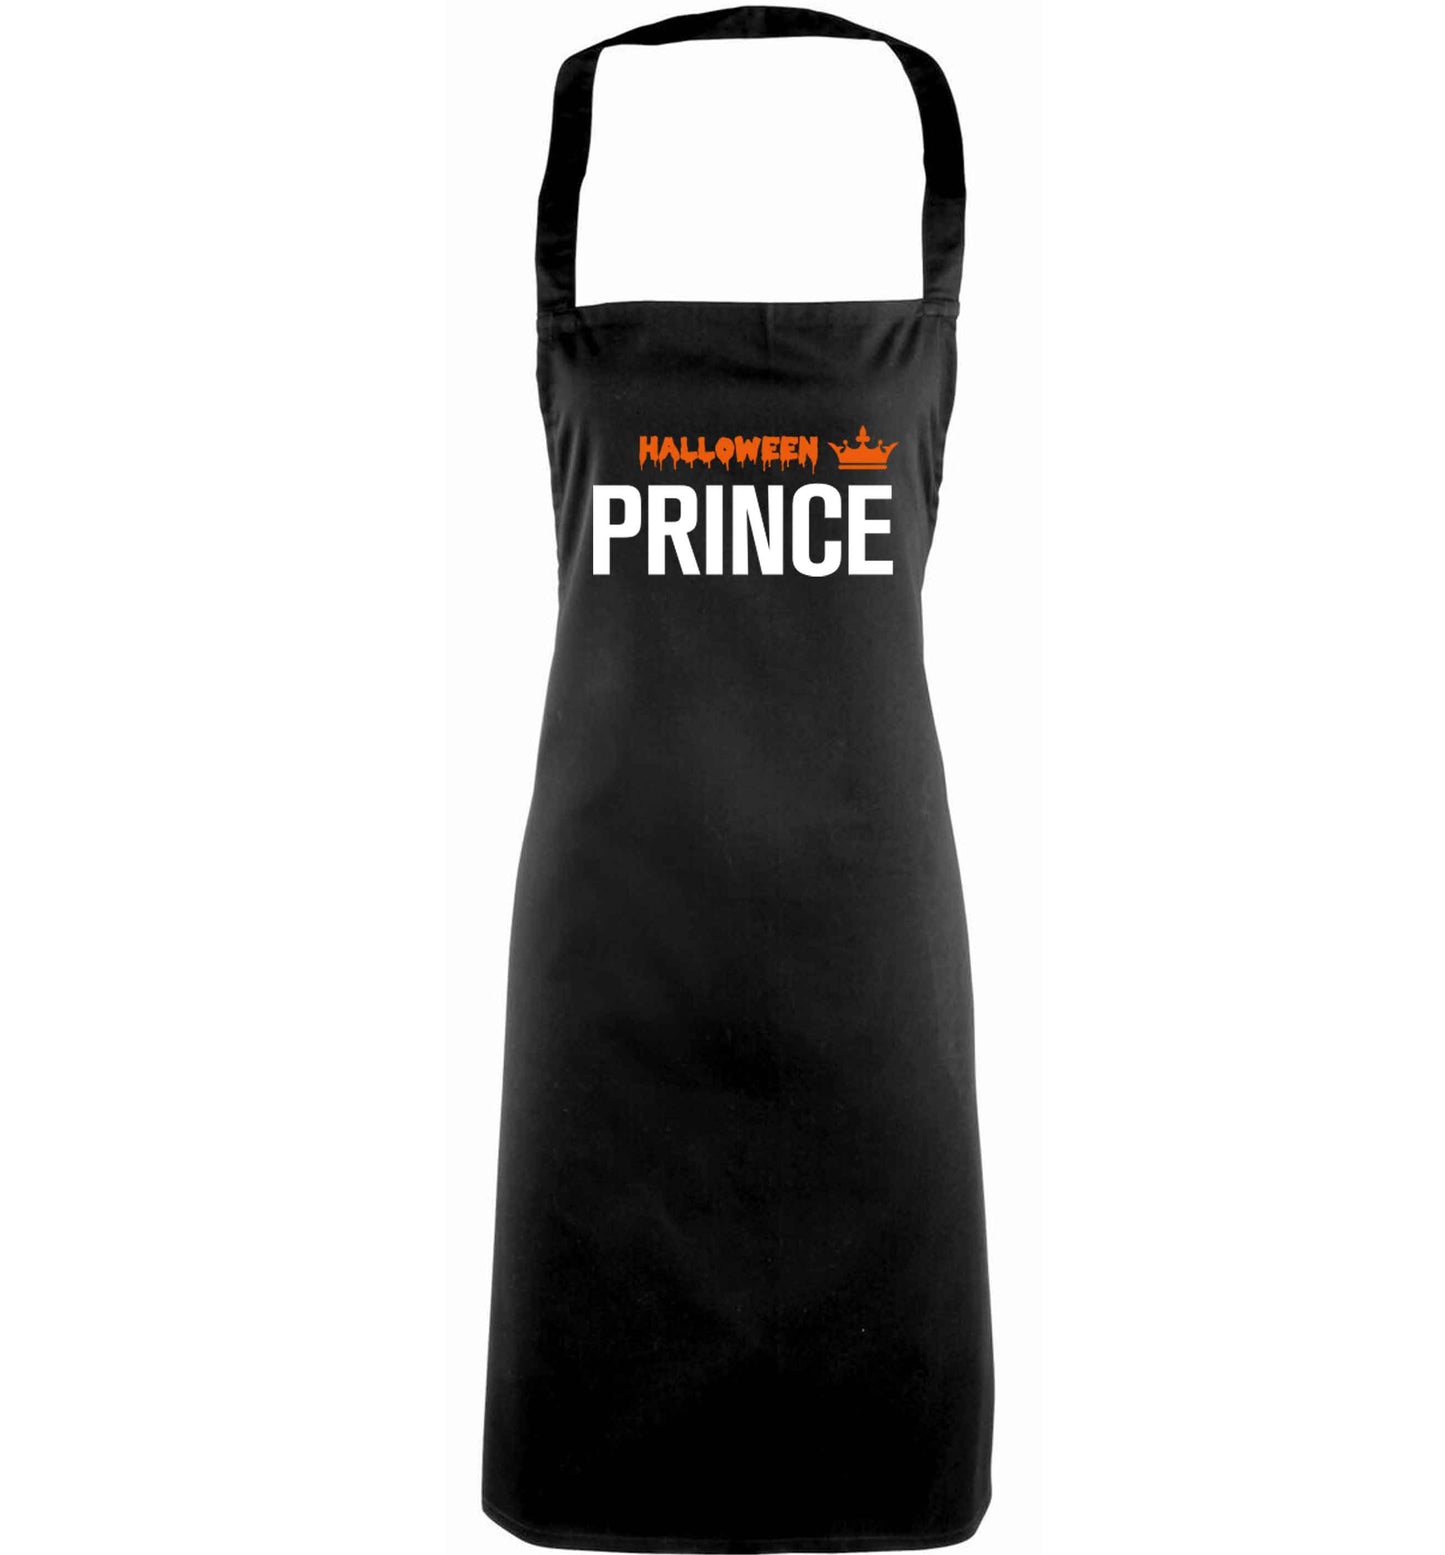 Halloween prince adults black apron